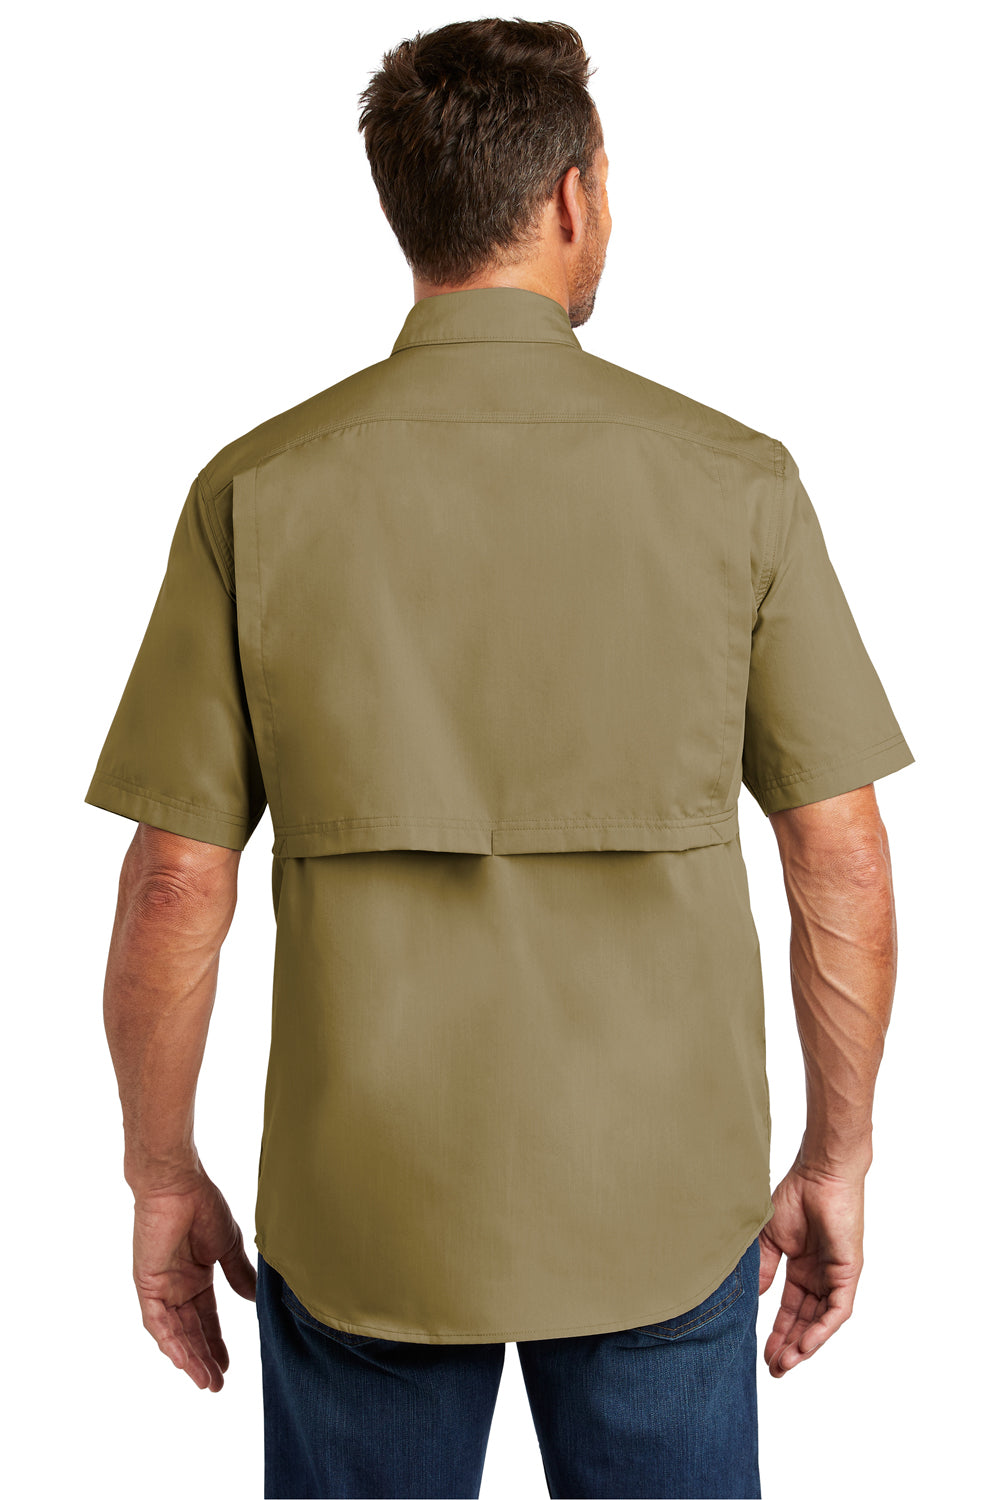 Carhartt CT102417 Mens Force Ridgefield Moisture Wicking Short Sleeve Button Down Shirt w/ Double Pockets Khaki Brown Back